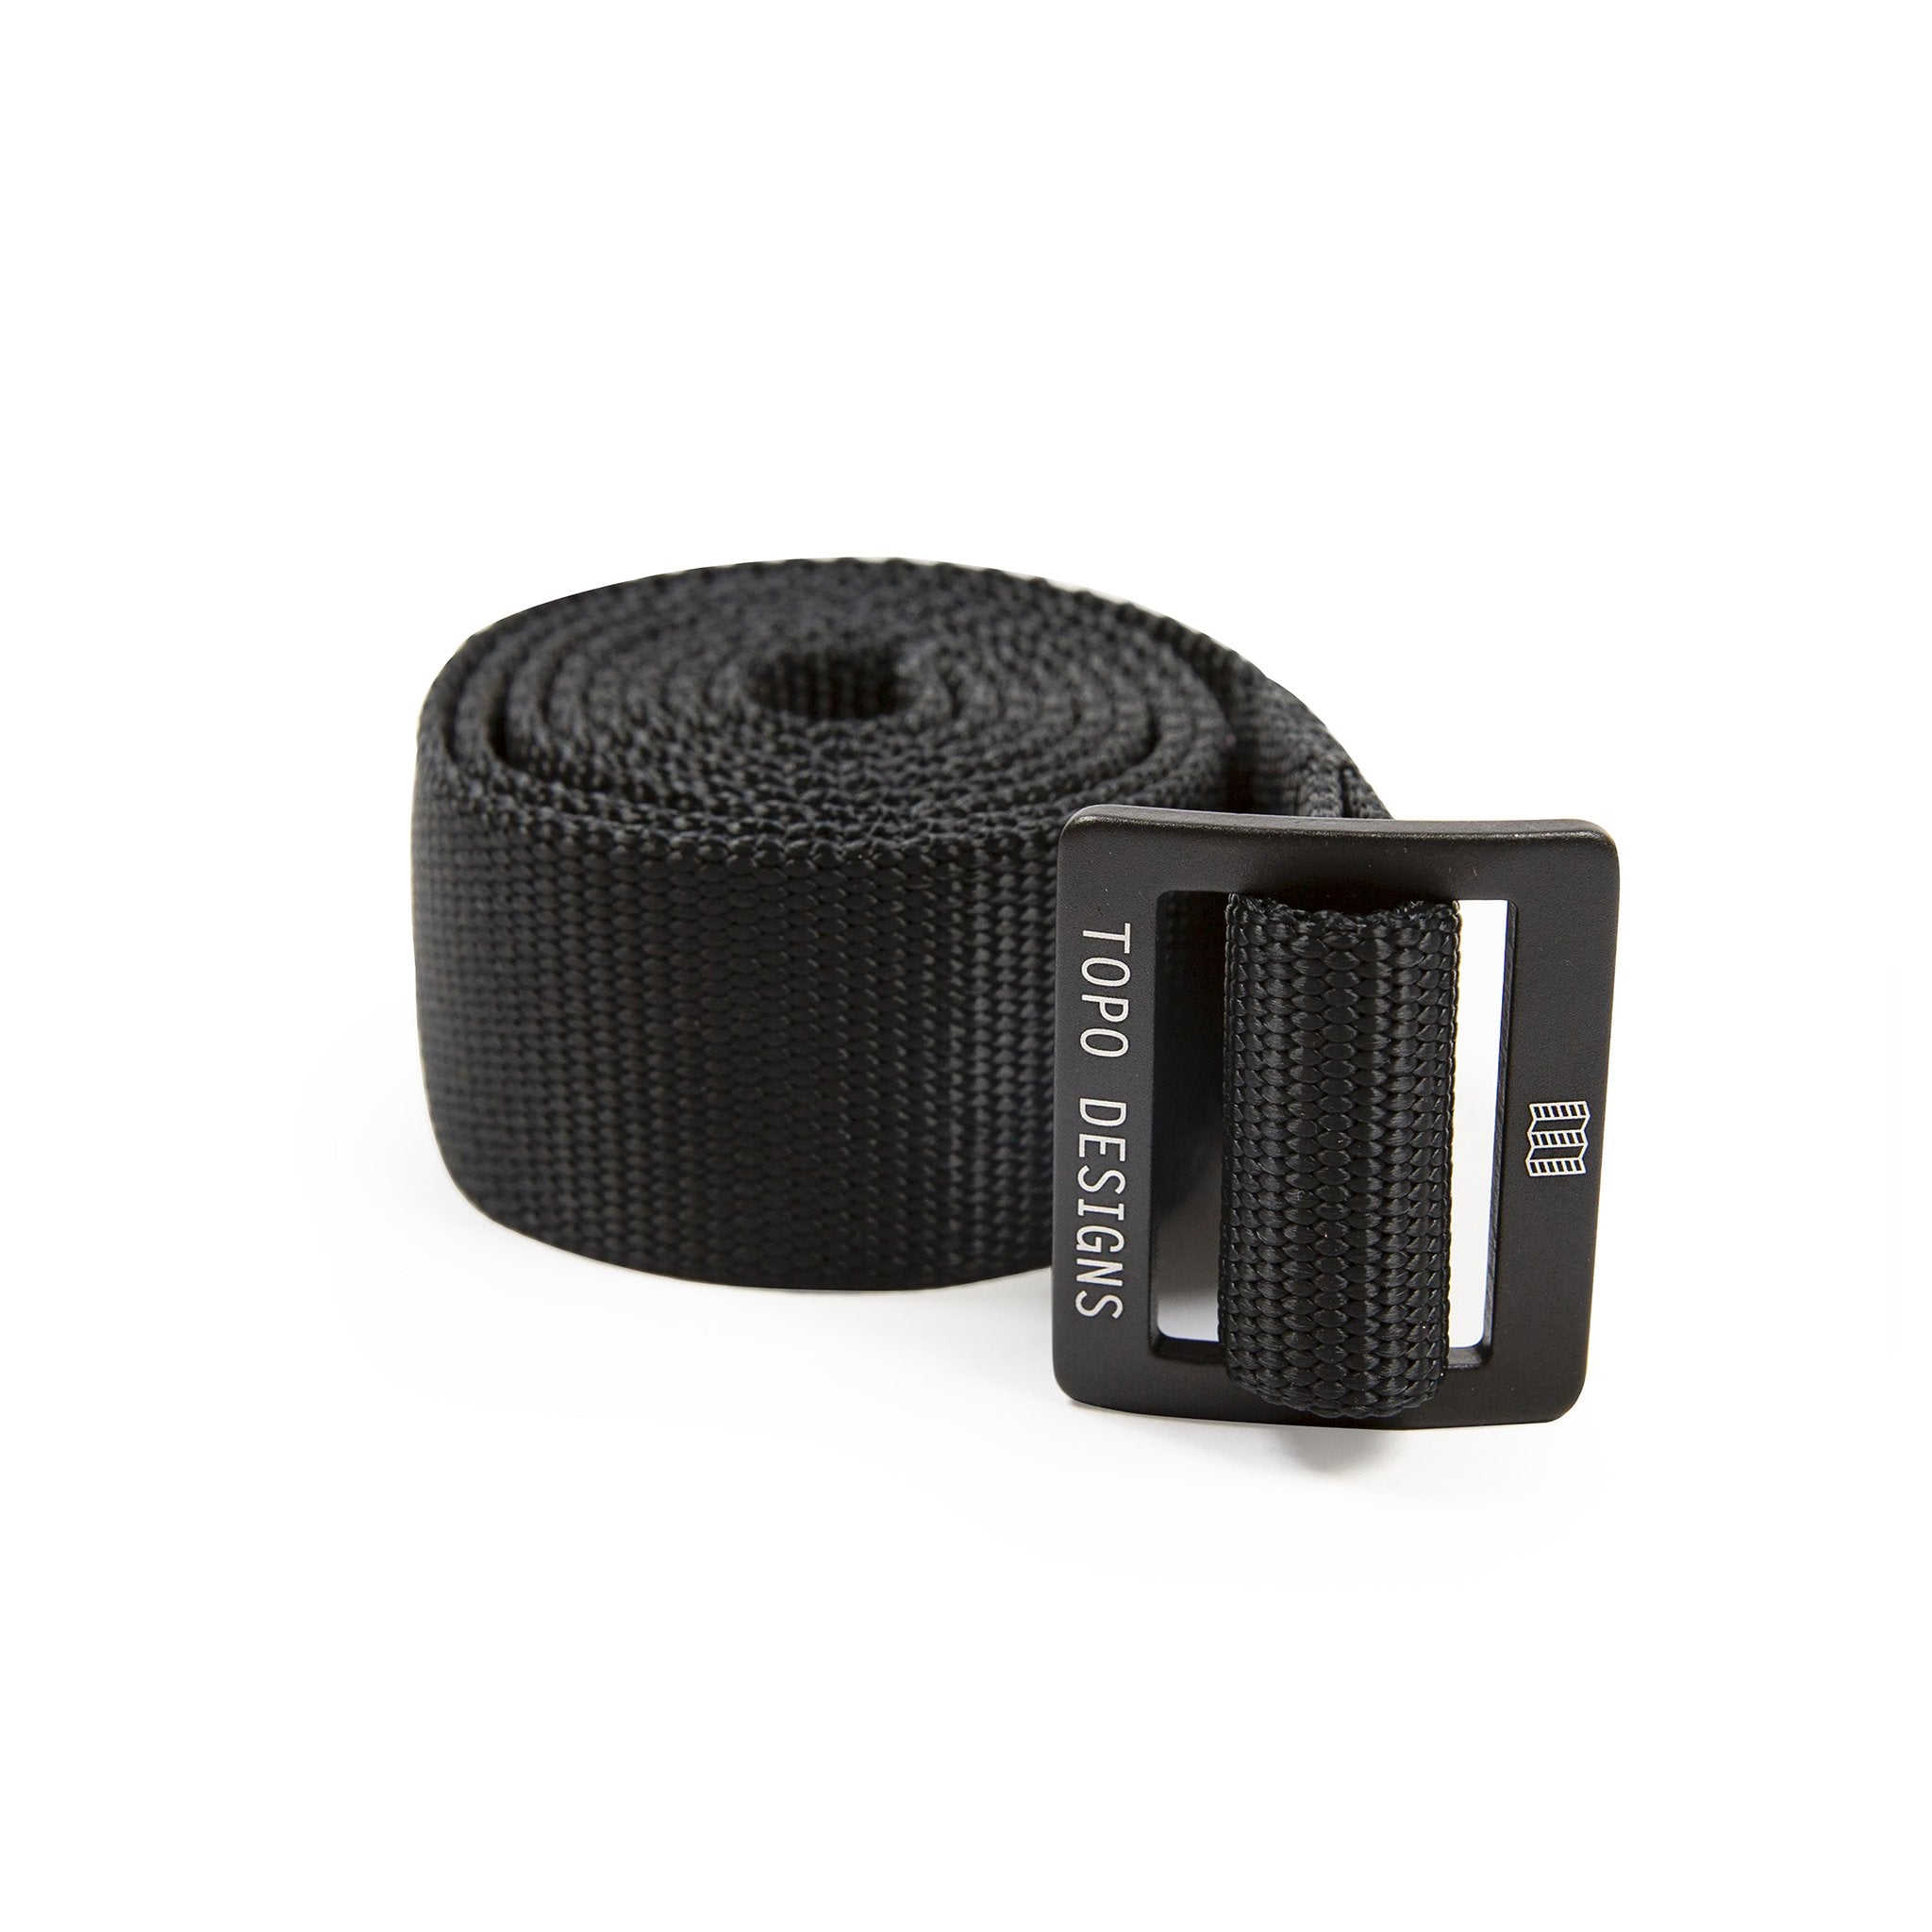 Topo Designs web belt in black with black buckle